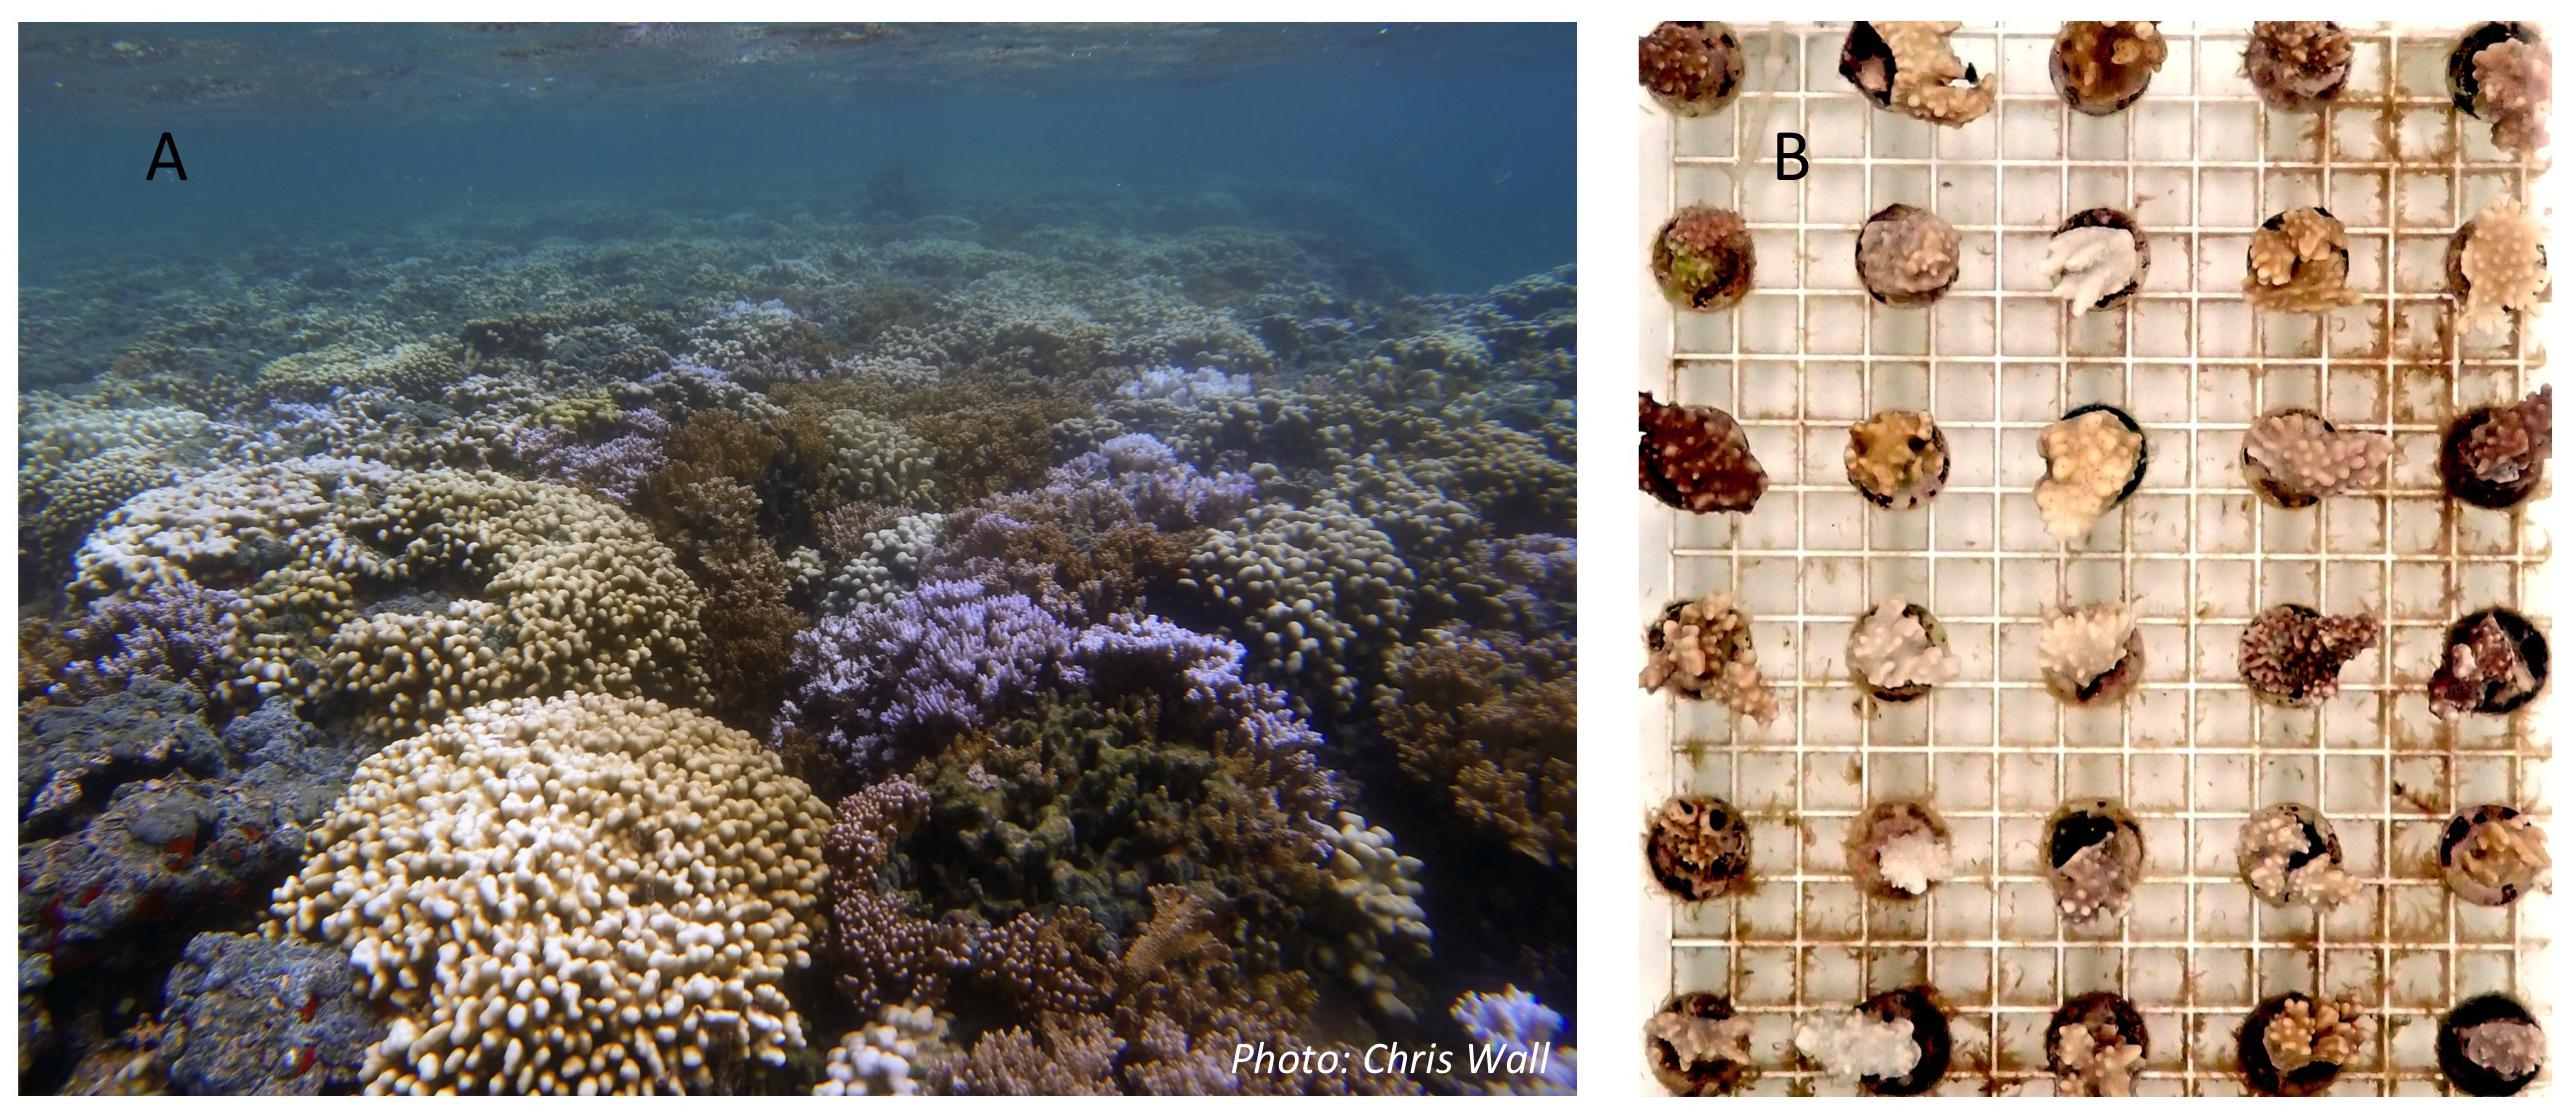 IV. Benefits of Coral Farming for Conservation Efforts